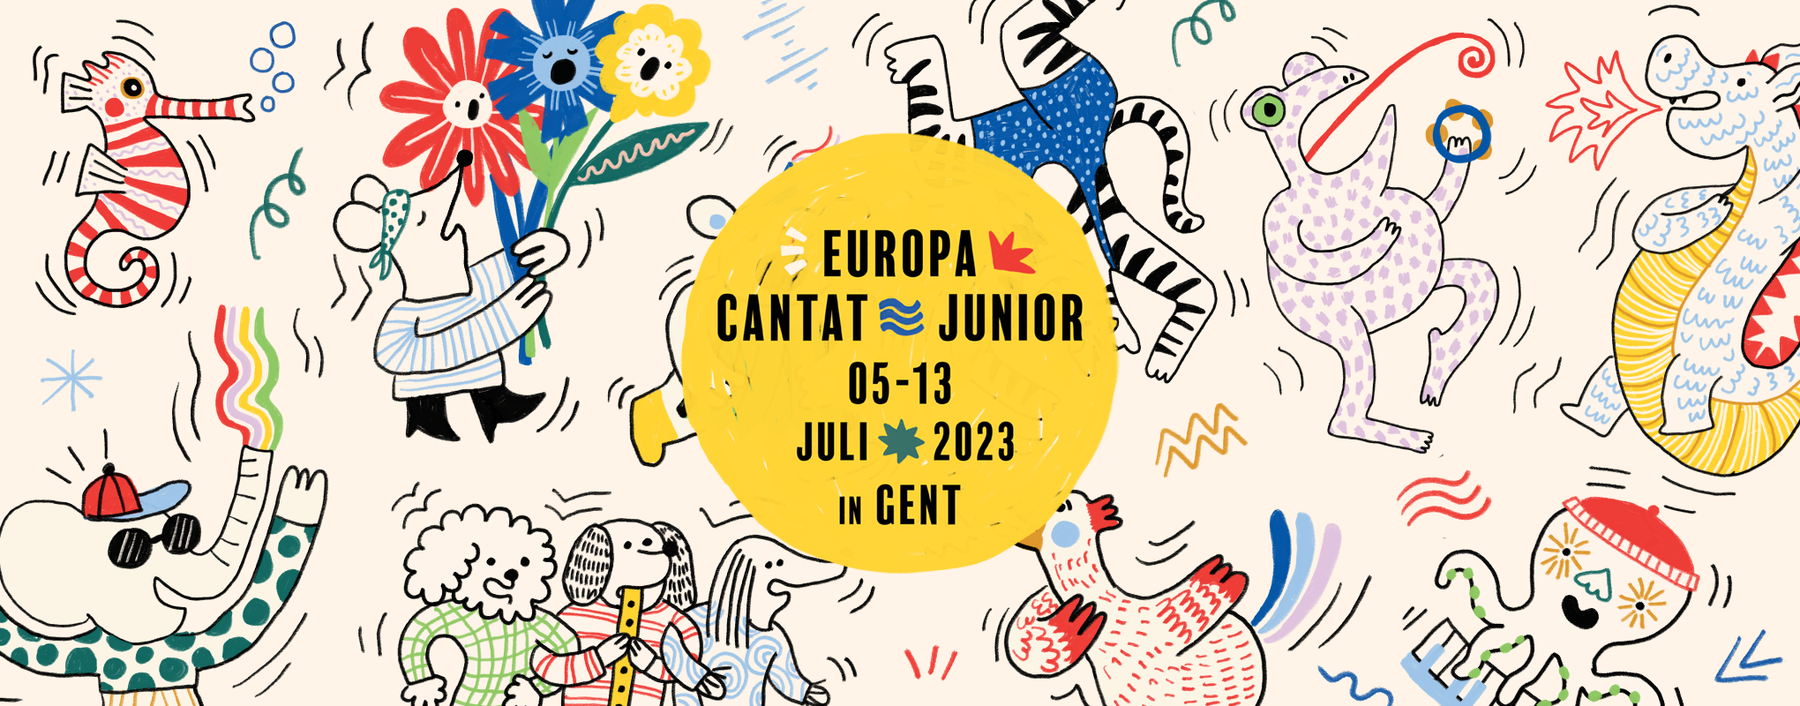 Europa Cantat junior 2023